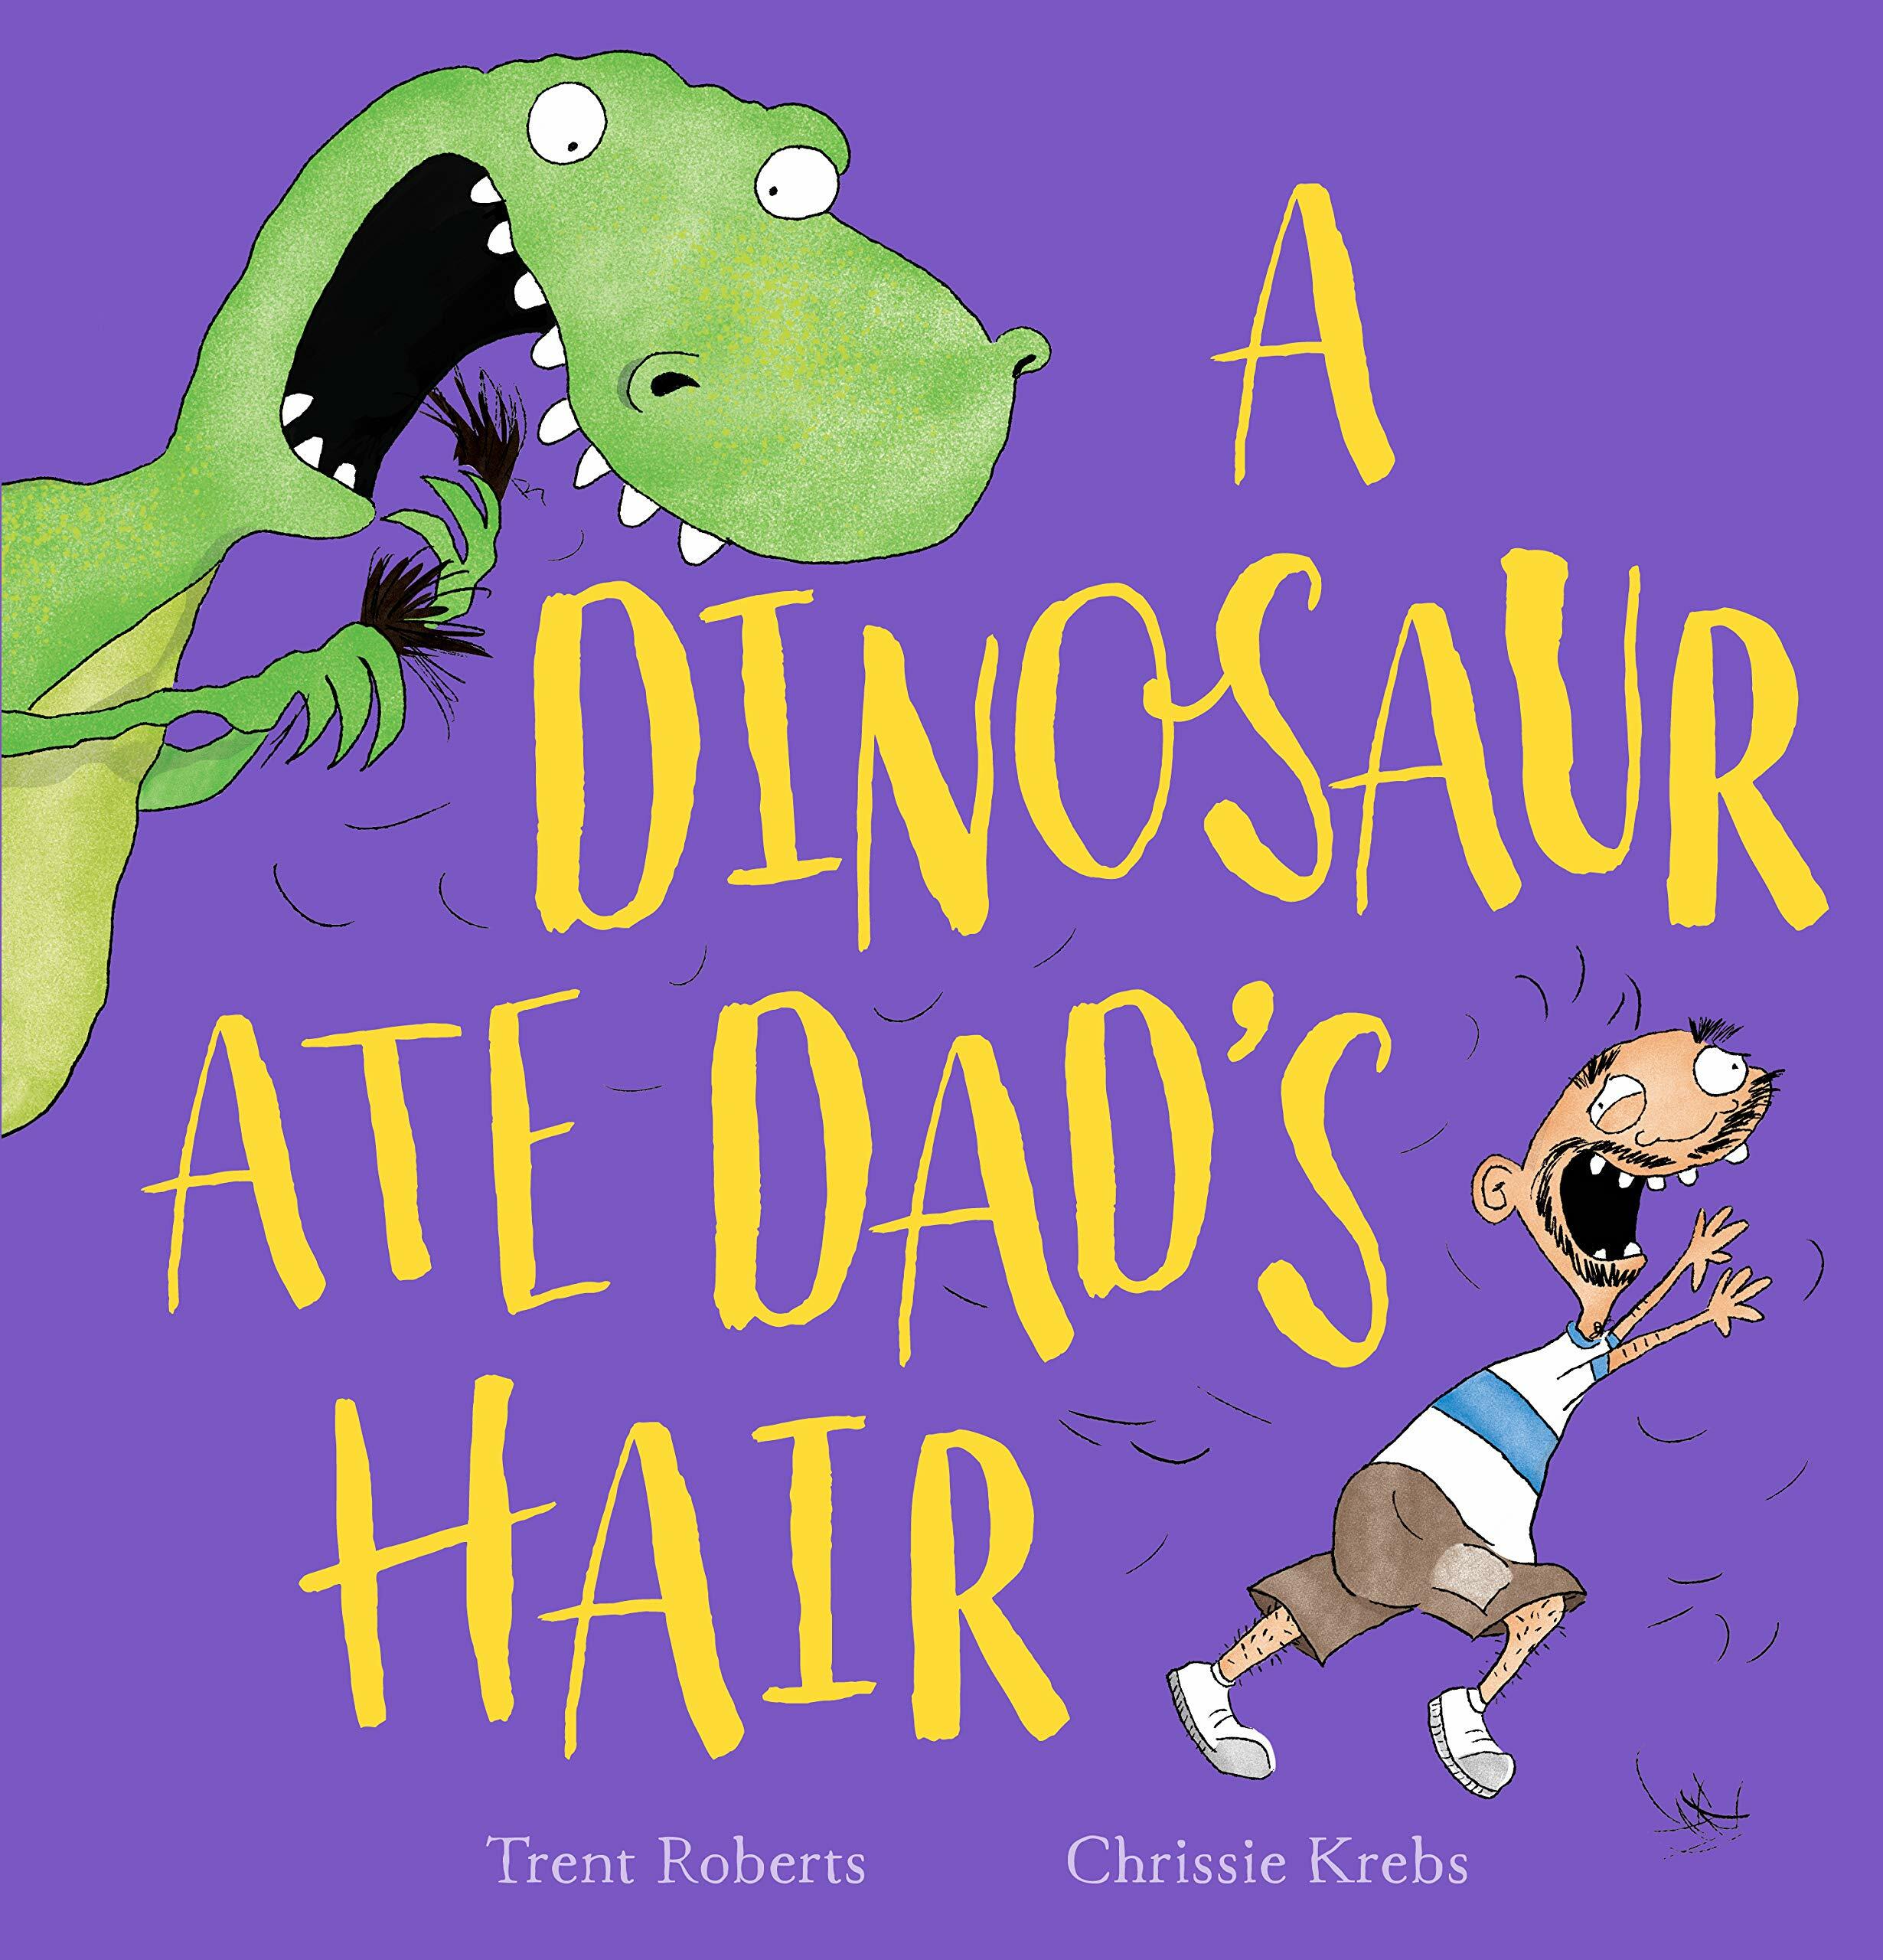 A Dinosaur Ate Dads Hair (Paperback)